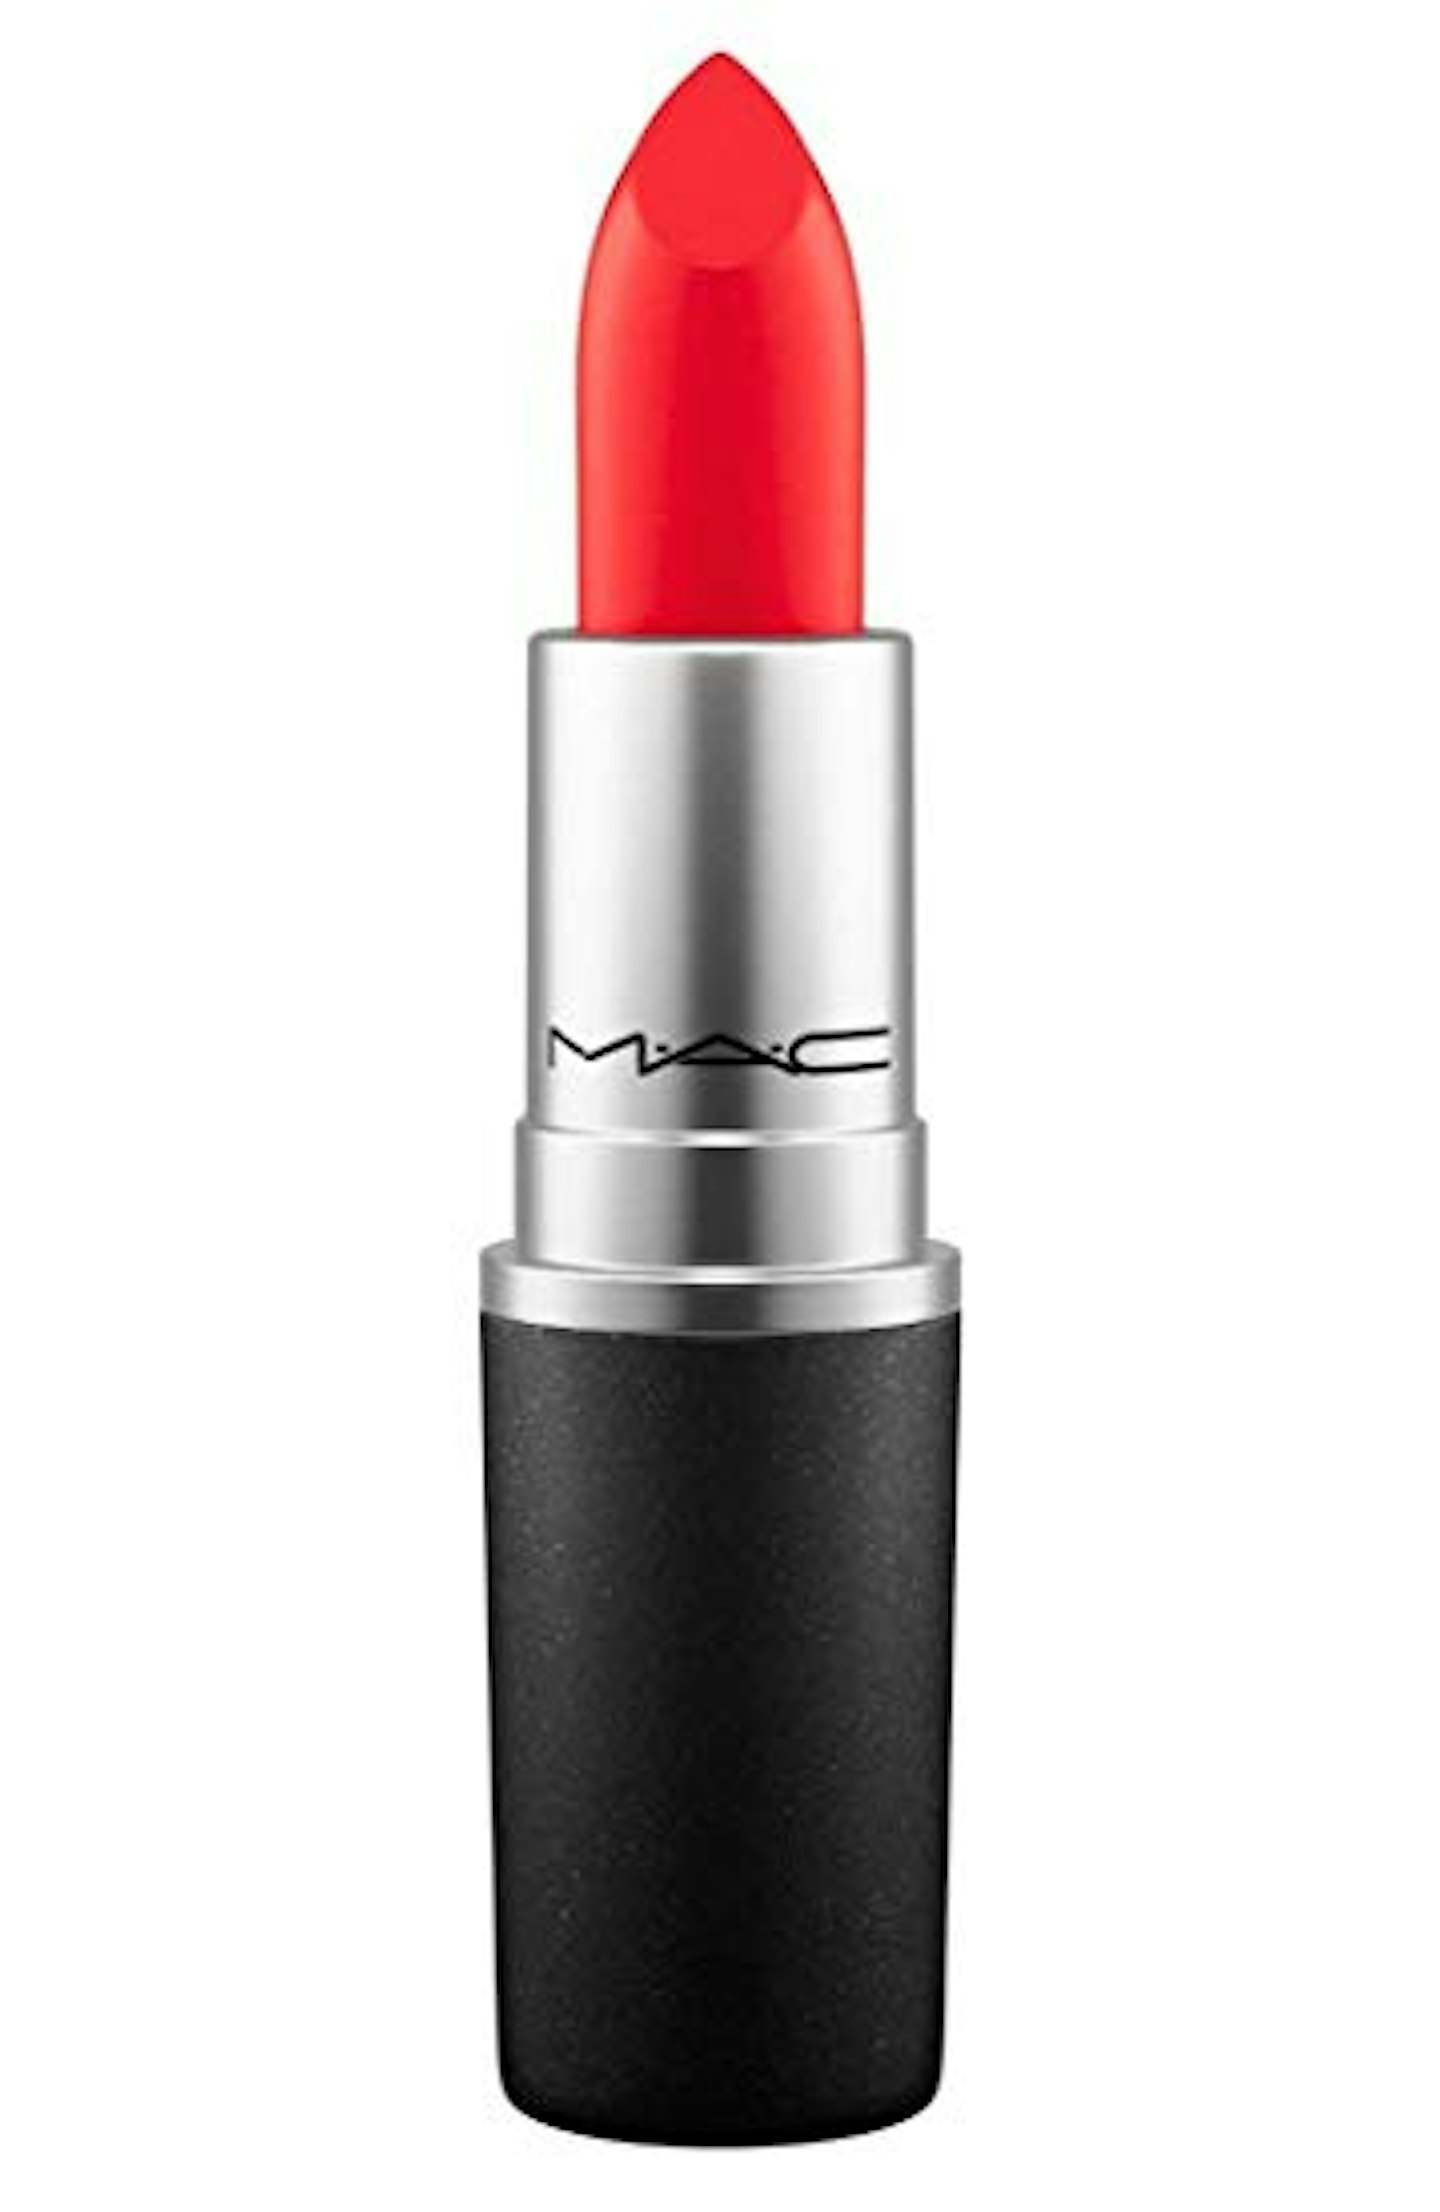 MAC, Lady Danger Lipstick, £17.50